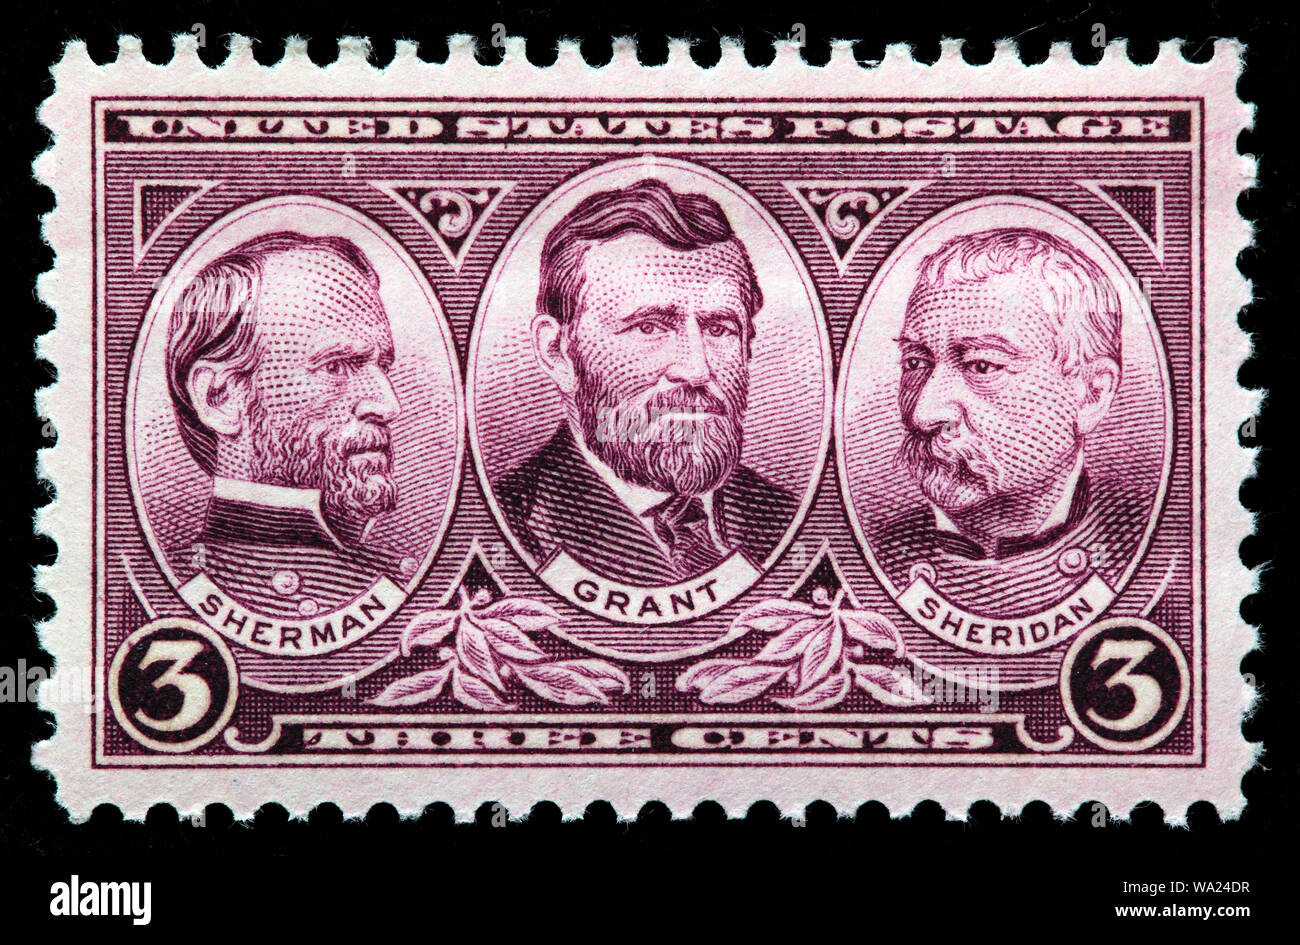 William T. Sherman (1820-1891), Ulysses S. Grant (1822-1885), Philip H. Sheridan (1831-1888), Generals, Civil war, postage stamp, USA, 1937 Stock Photo